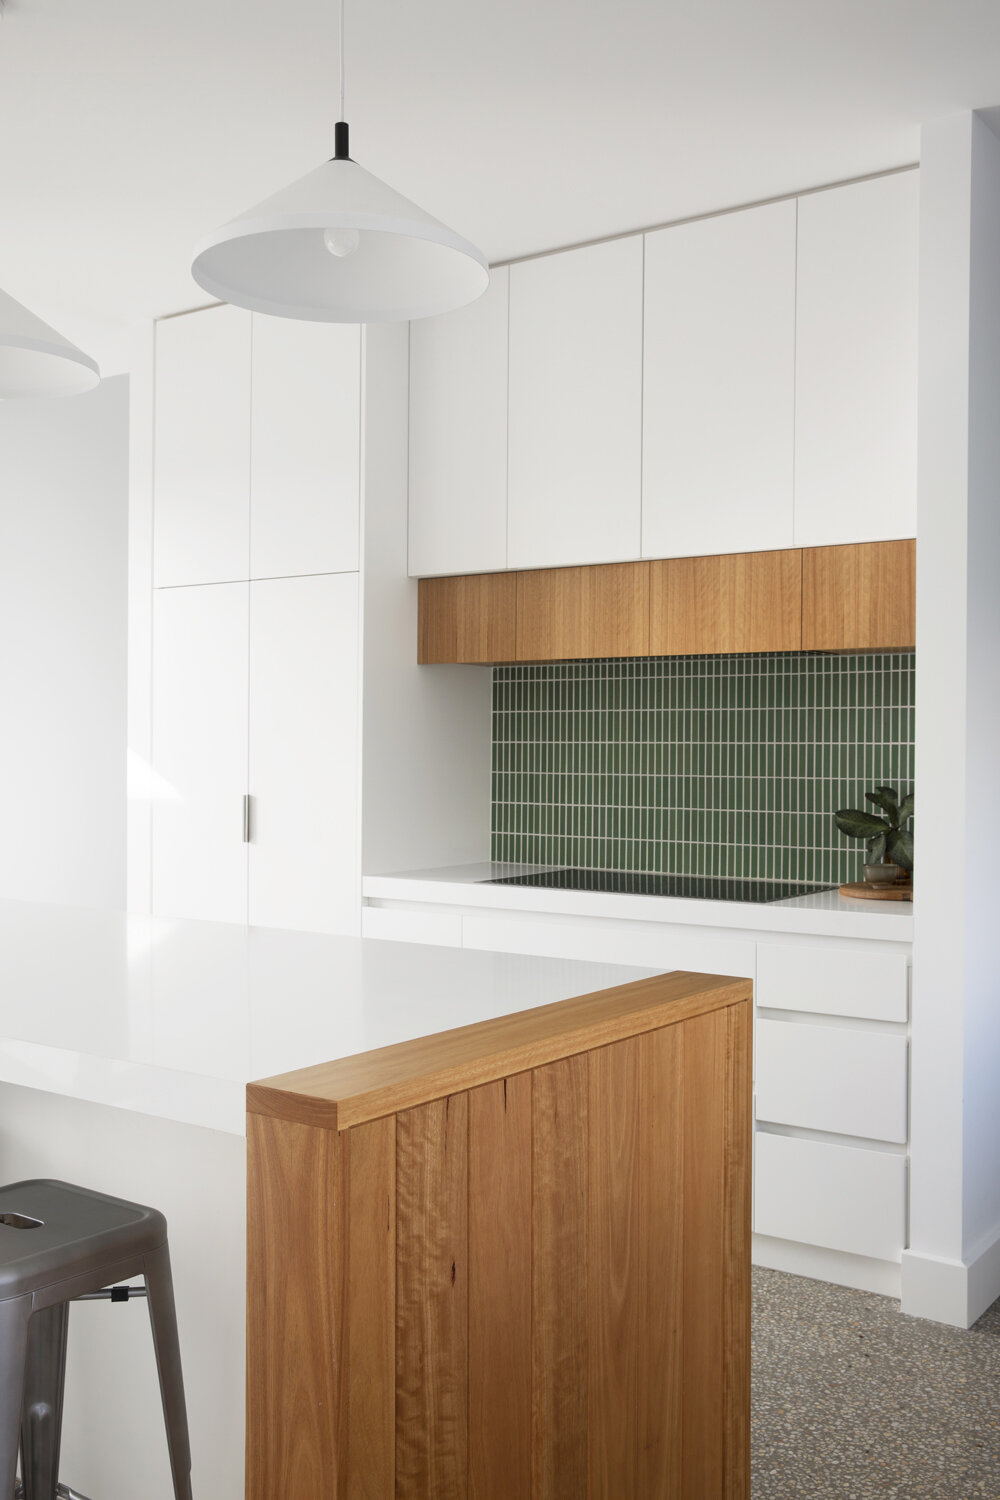 Sorrento beach house kitchen designed by interior designer Meredith Lee